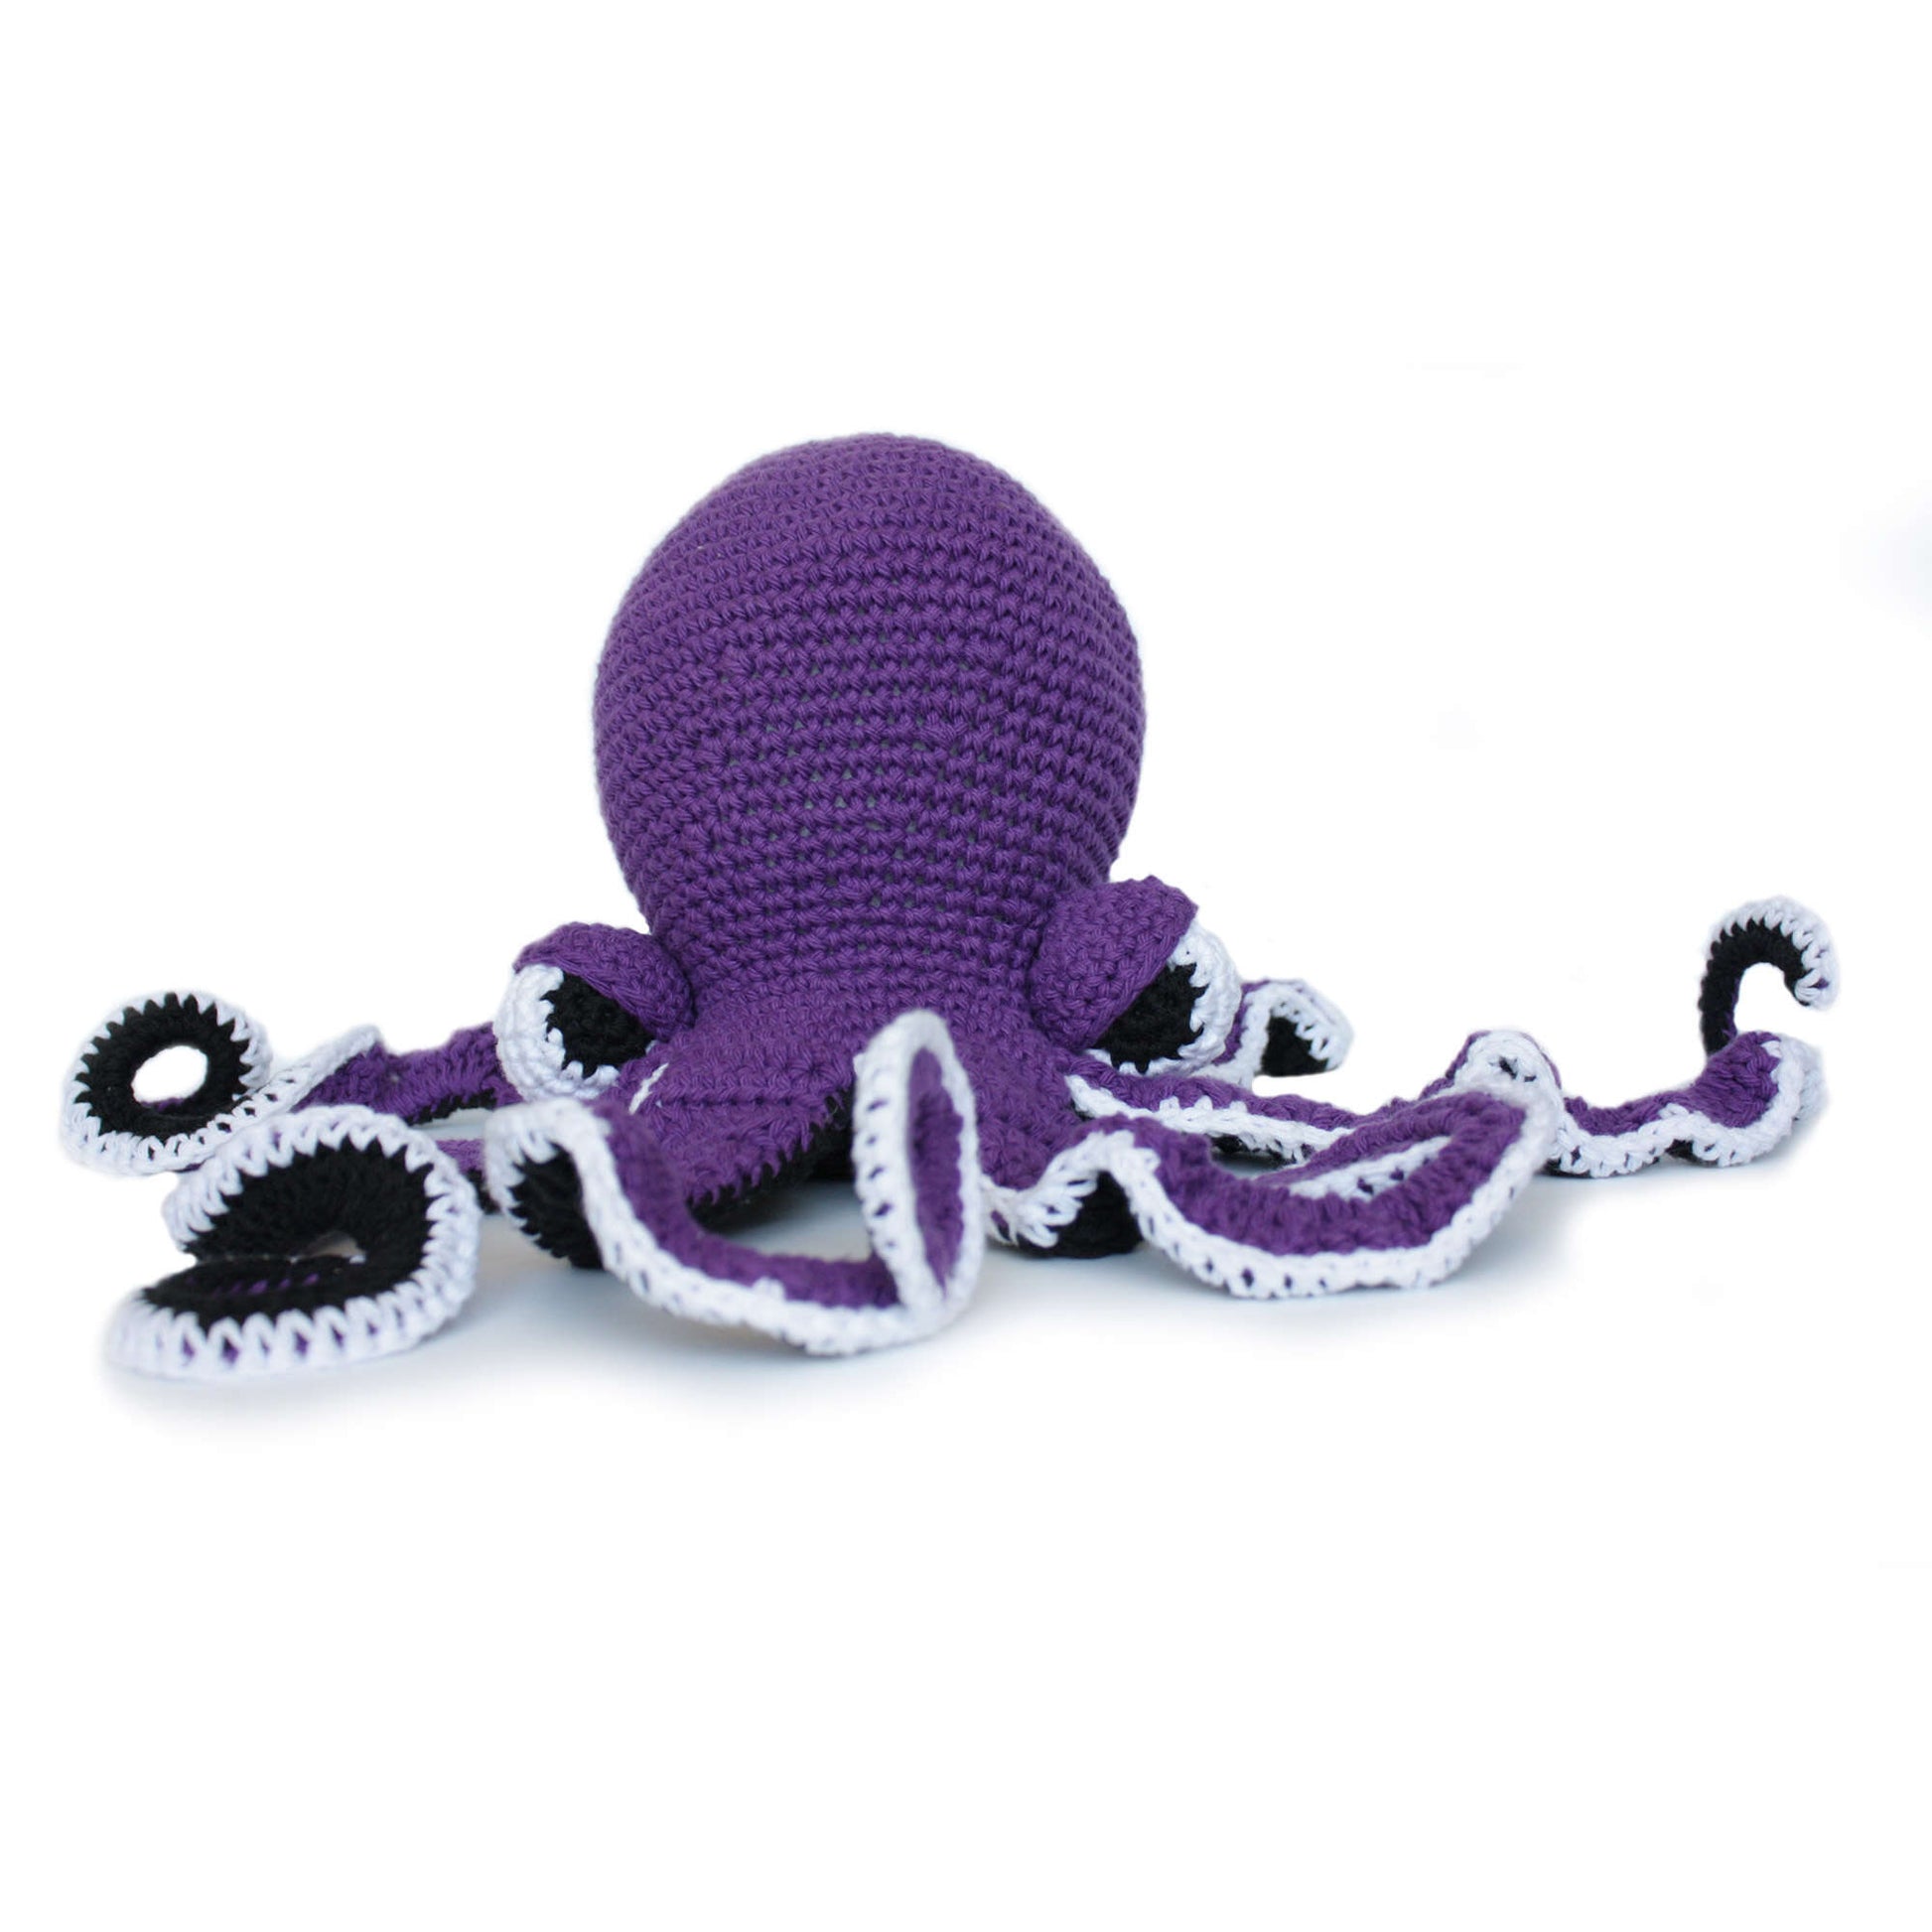 Free Lily Sugar'n Cream Octavia the Octopus Crochet Pattern